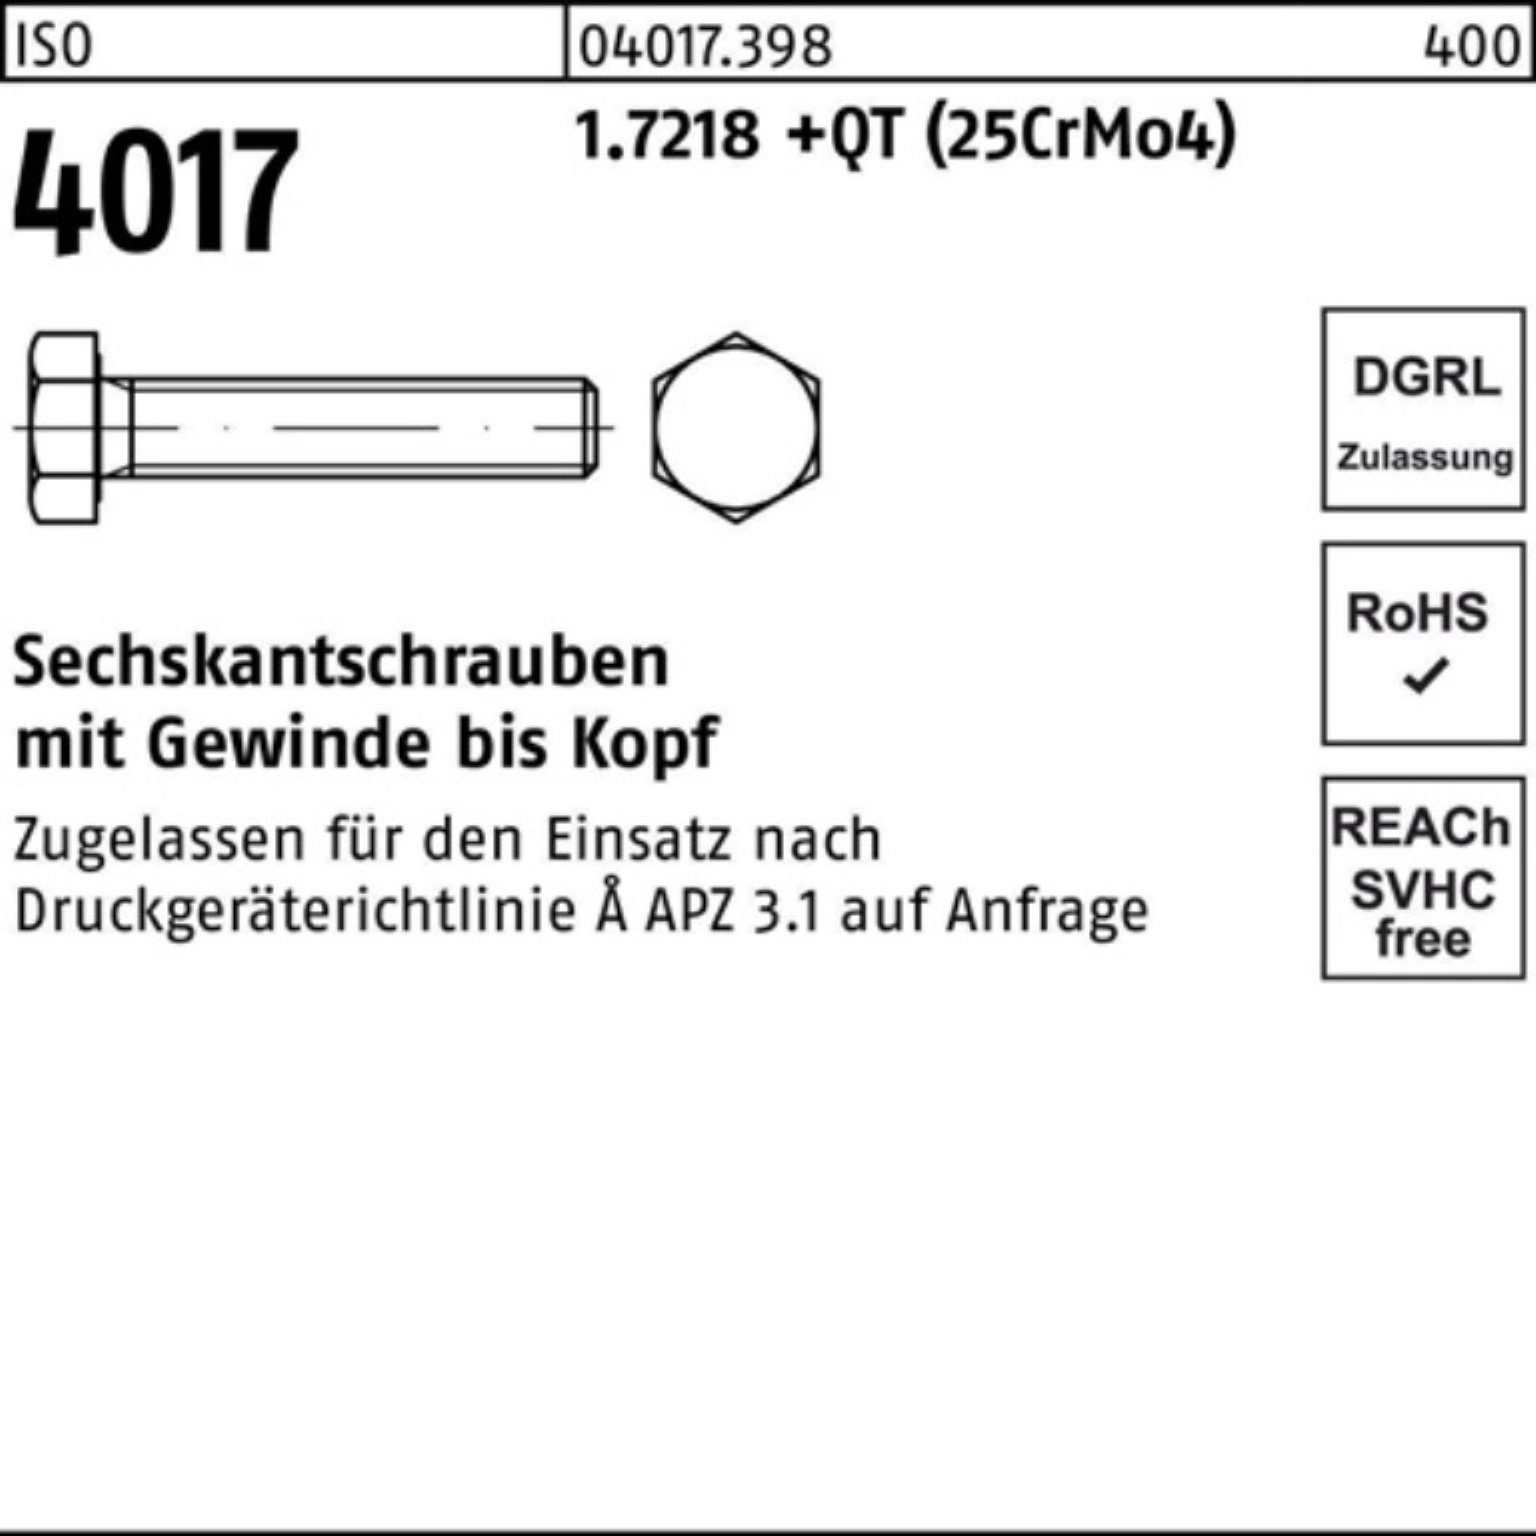 M12x (25CrMo4) +QT Sechskantschraube Pack 4017 Bufab 100er 1.7218 20 VG ISO Sechskantschraube